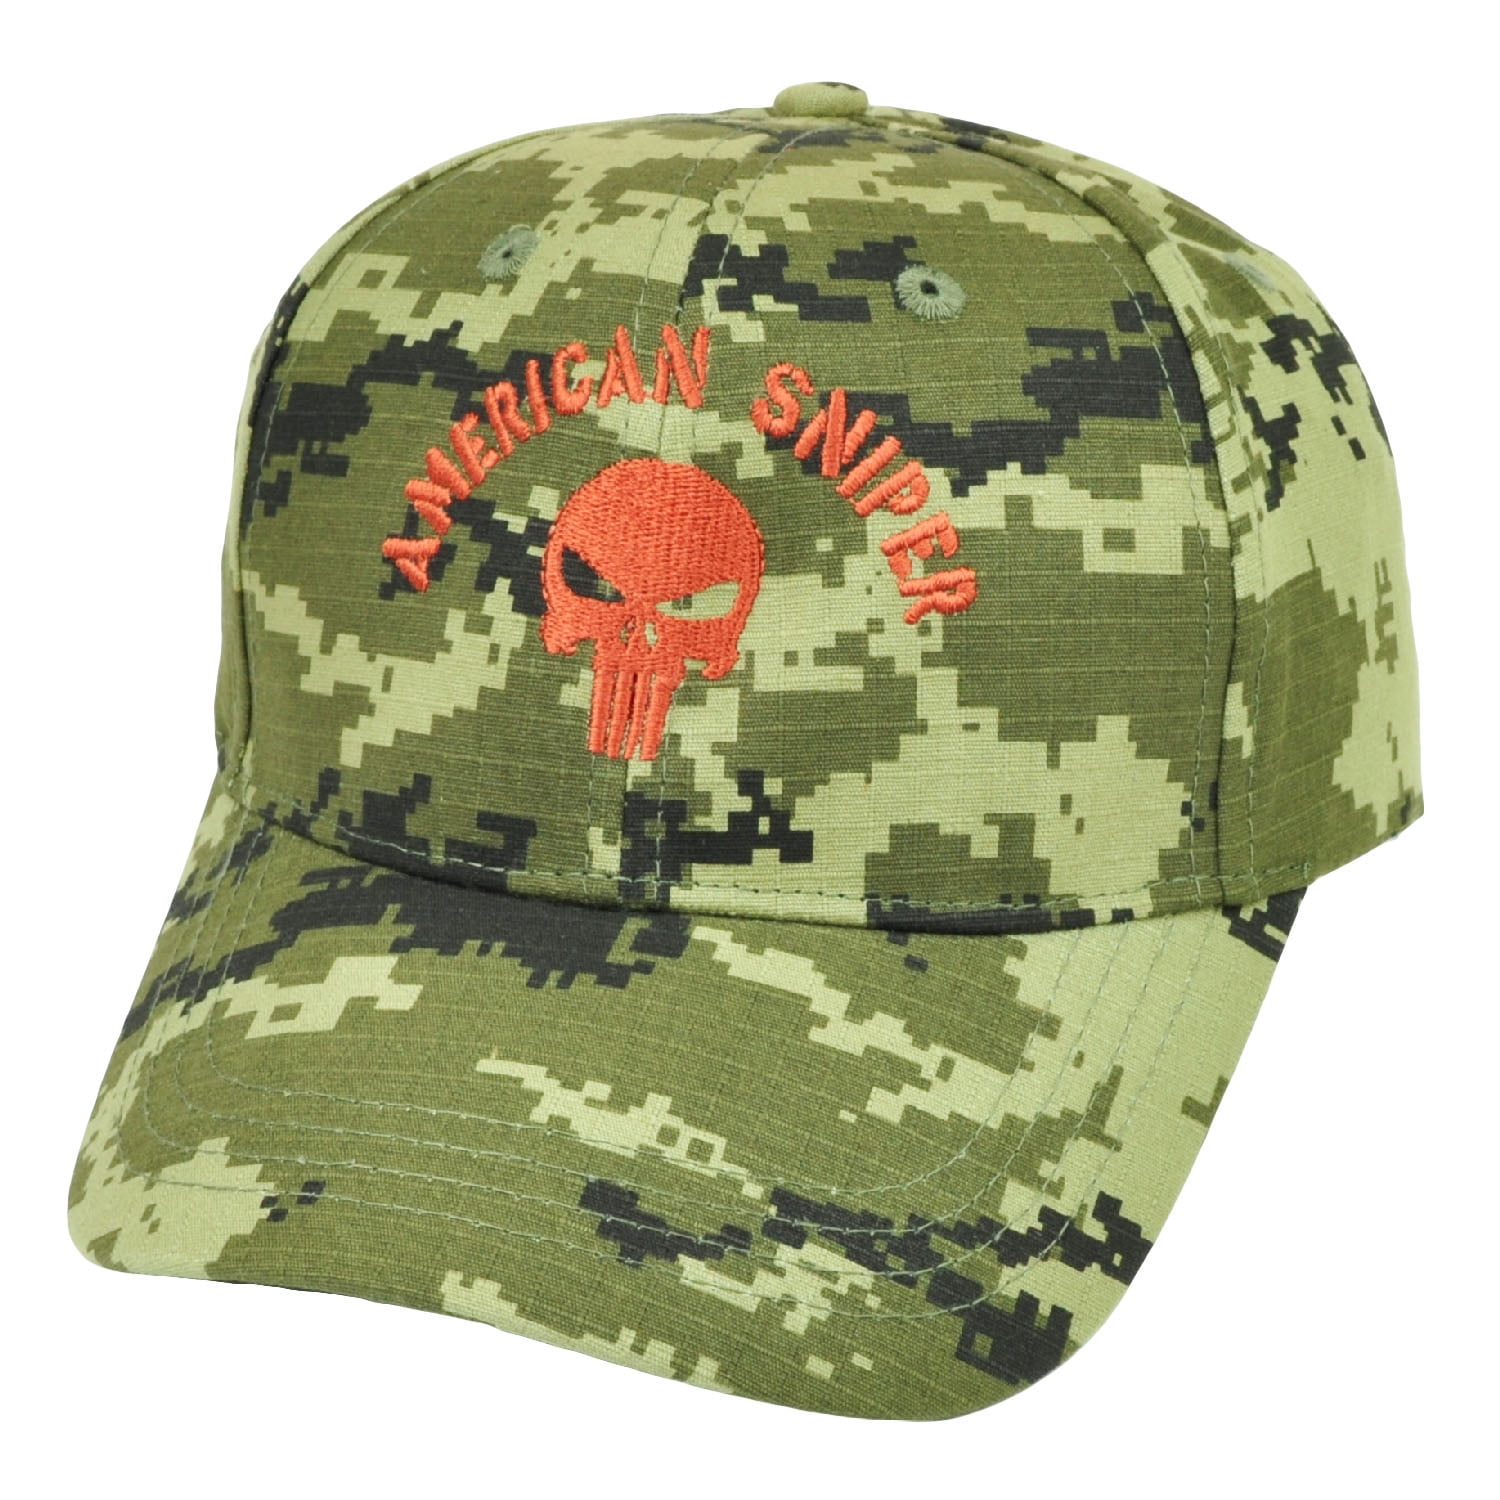 American Sniper Digital Camouflage Camo Hat Cap Gun  Skull War Support